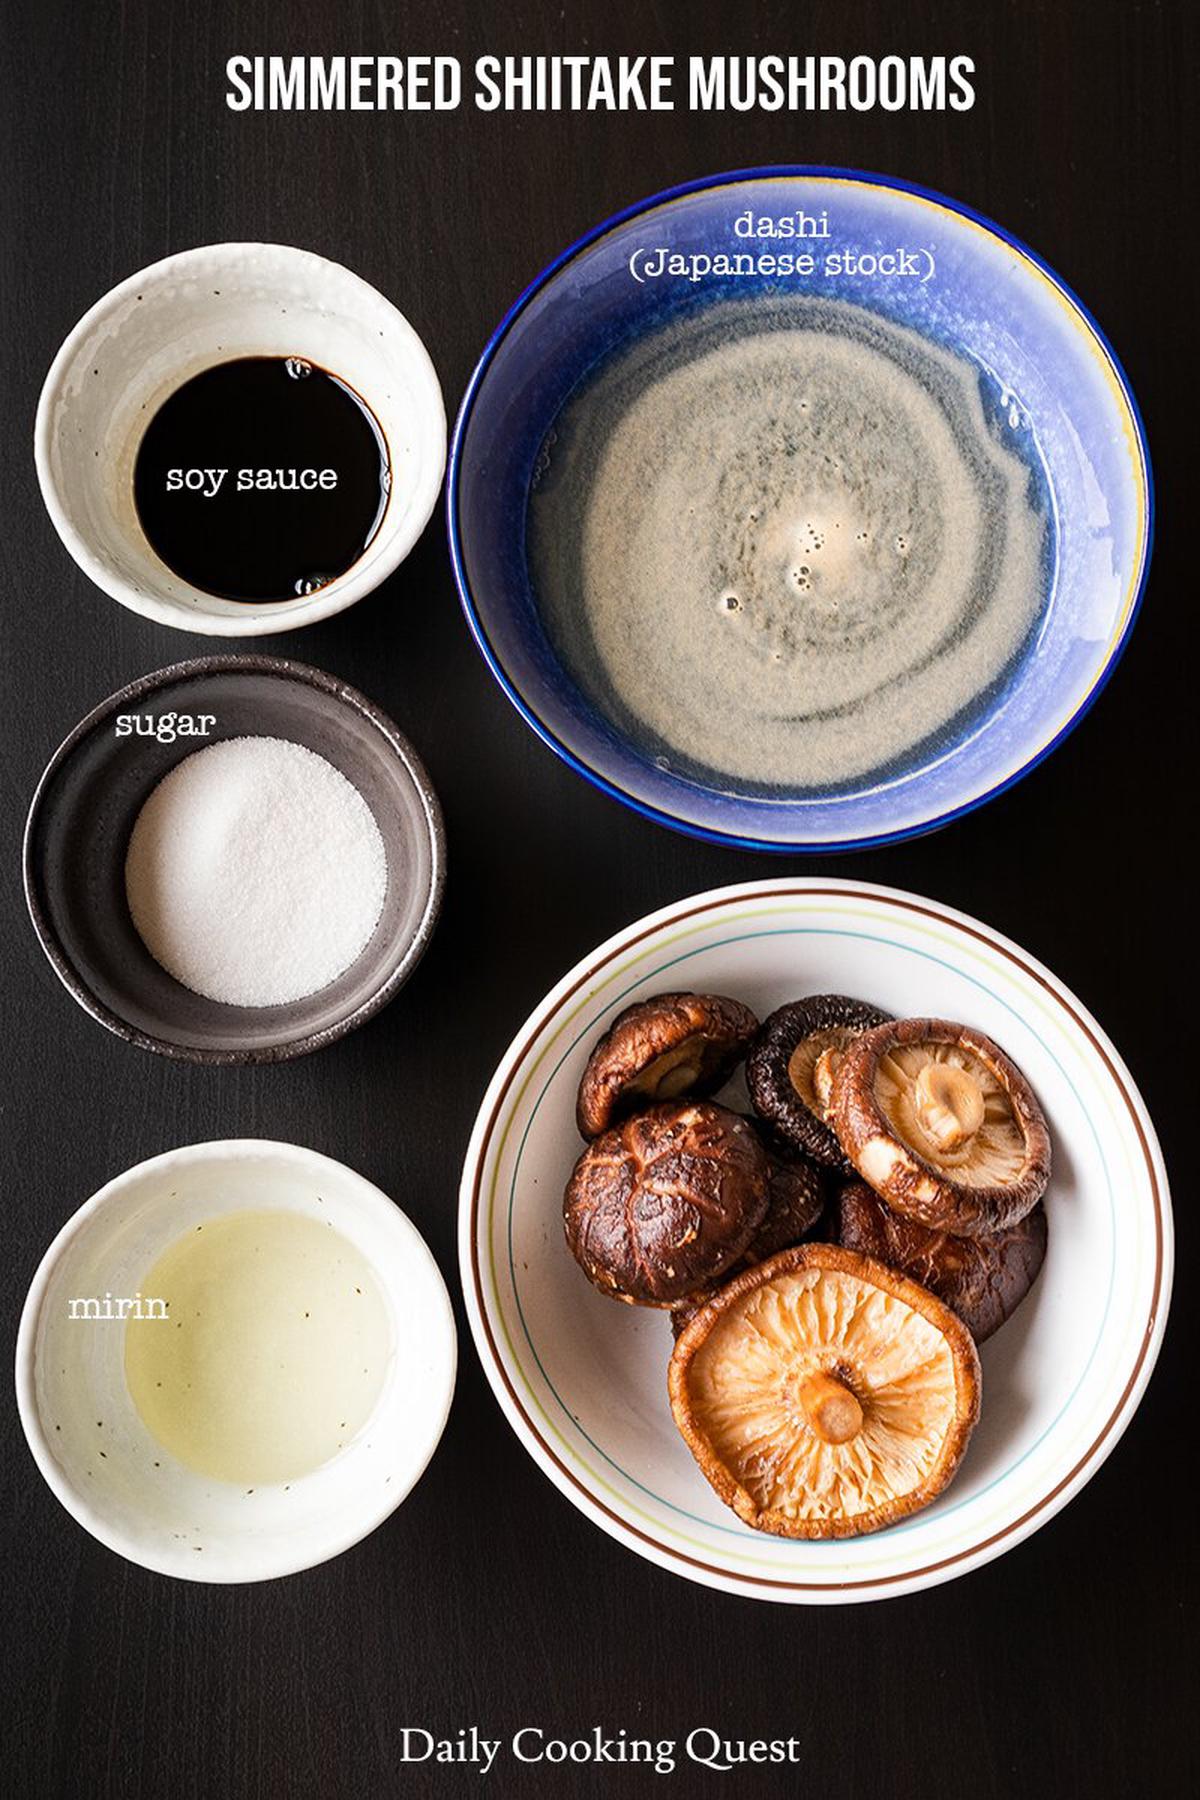 Ingredients for Japanese simmered shiitake mushrooms: shiitake mushrooms, dashi (Japanese stock), soy sauce, mirin, and sugar.